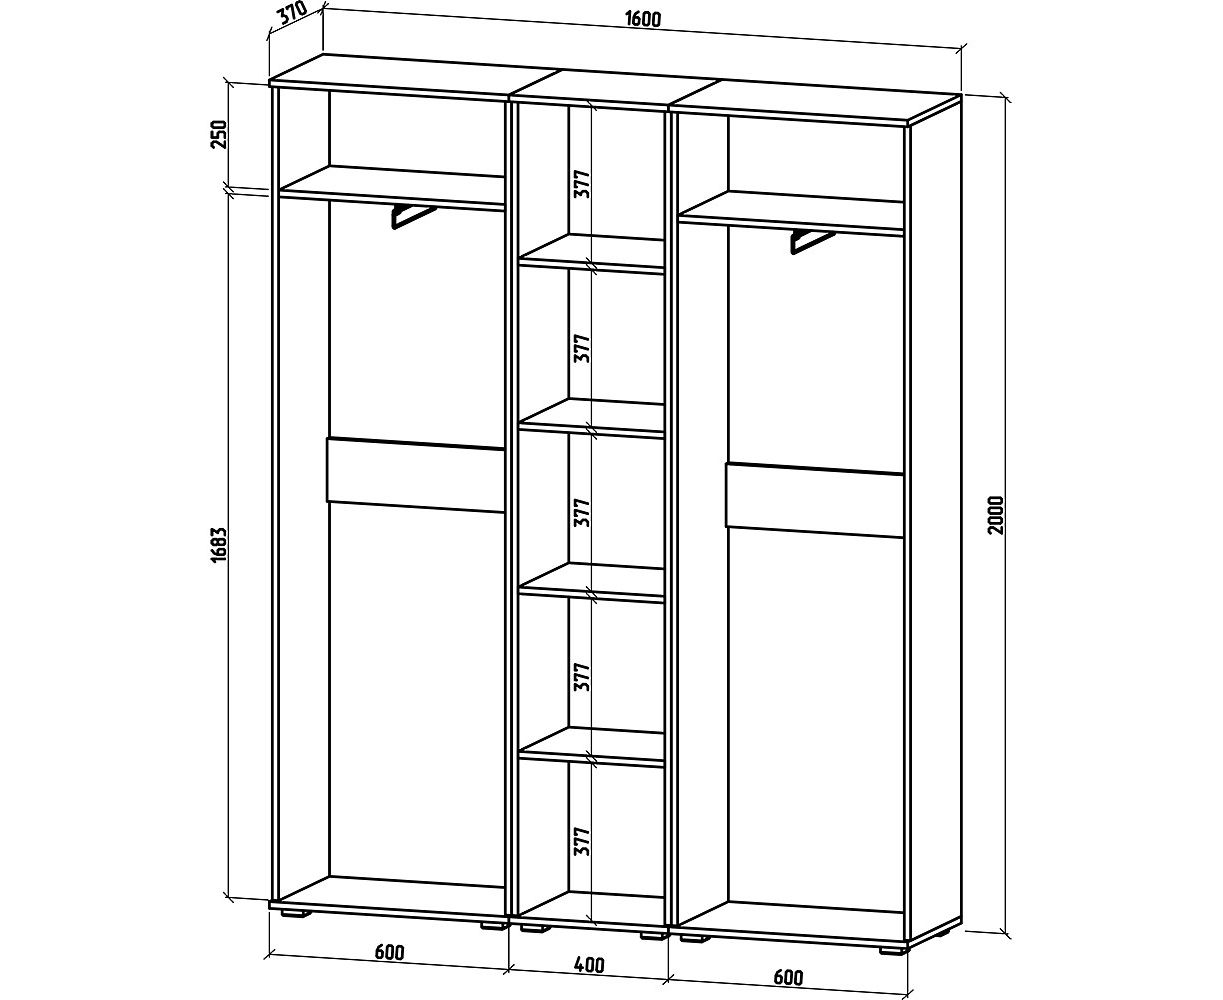 Онлайн чертеж шкафа: Онлайн-конструктор для шкафов и шкафов-купе ...